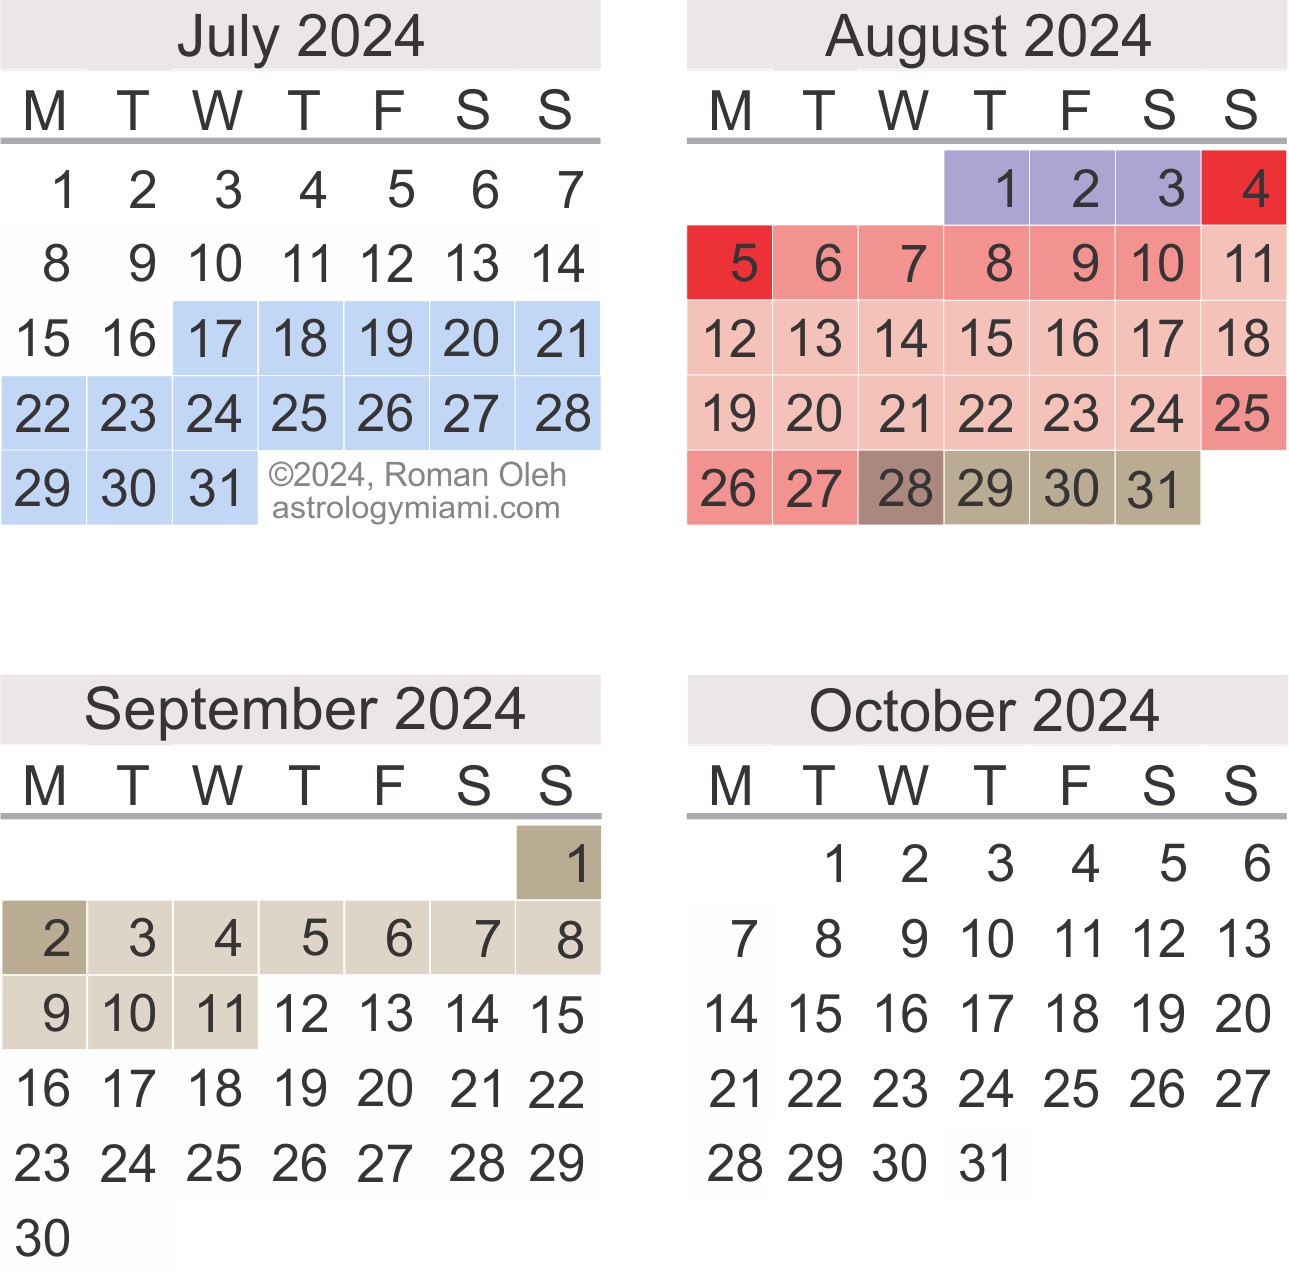 Mercury Retrograde Calendar, September to Decemberl 2020.  Copyright 2018 by Roman Oleh Yaworsky, www.astrologyhoroscopereadings.com